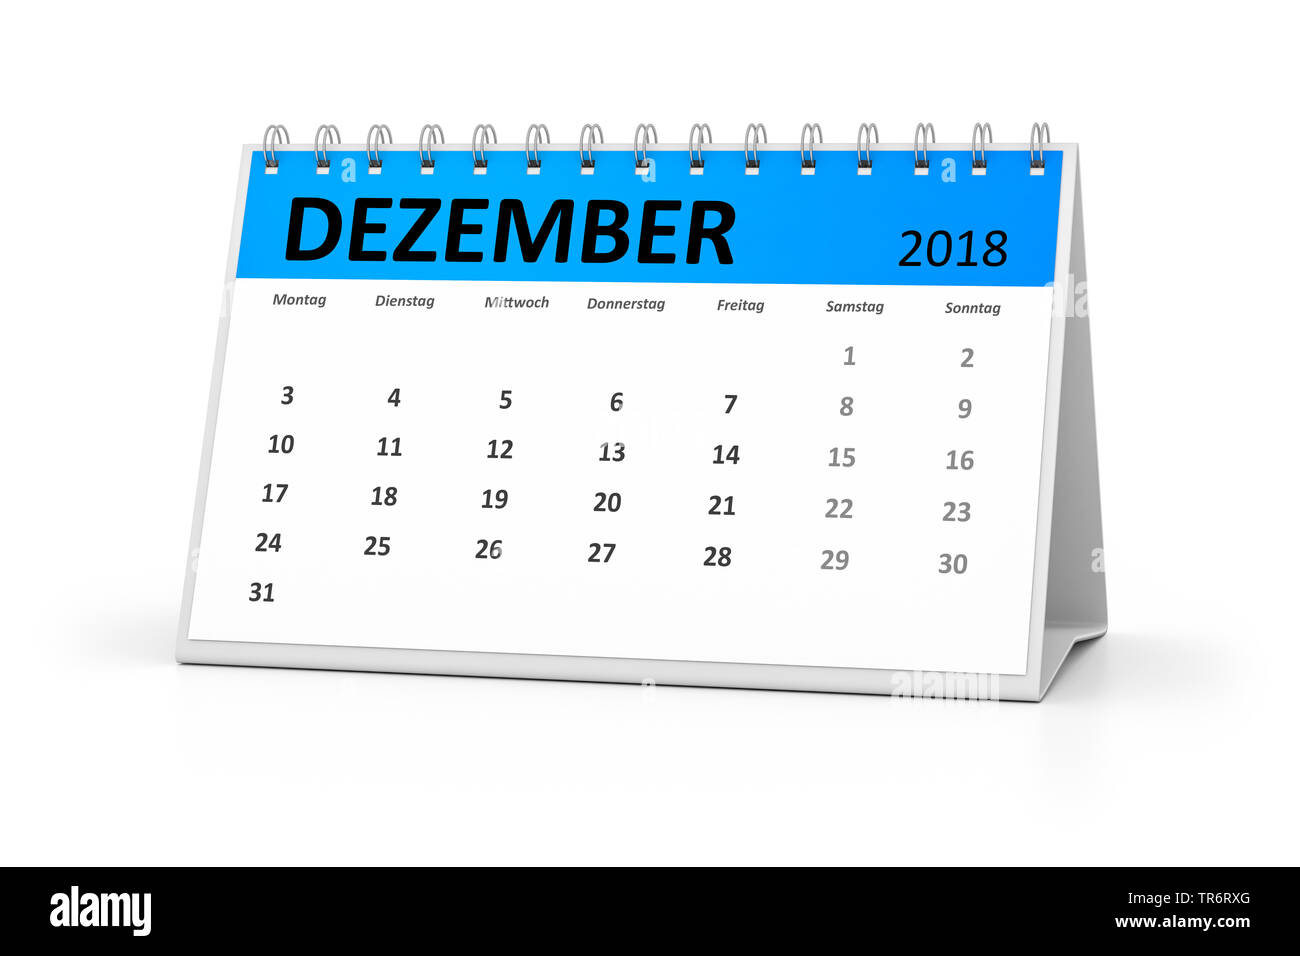 Tabella Calendario 2018 Dezember, dicembre Foto Stock